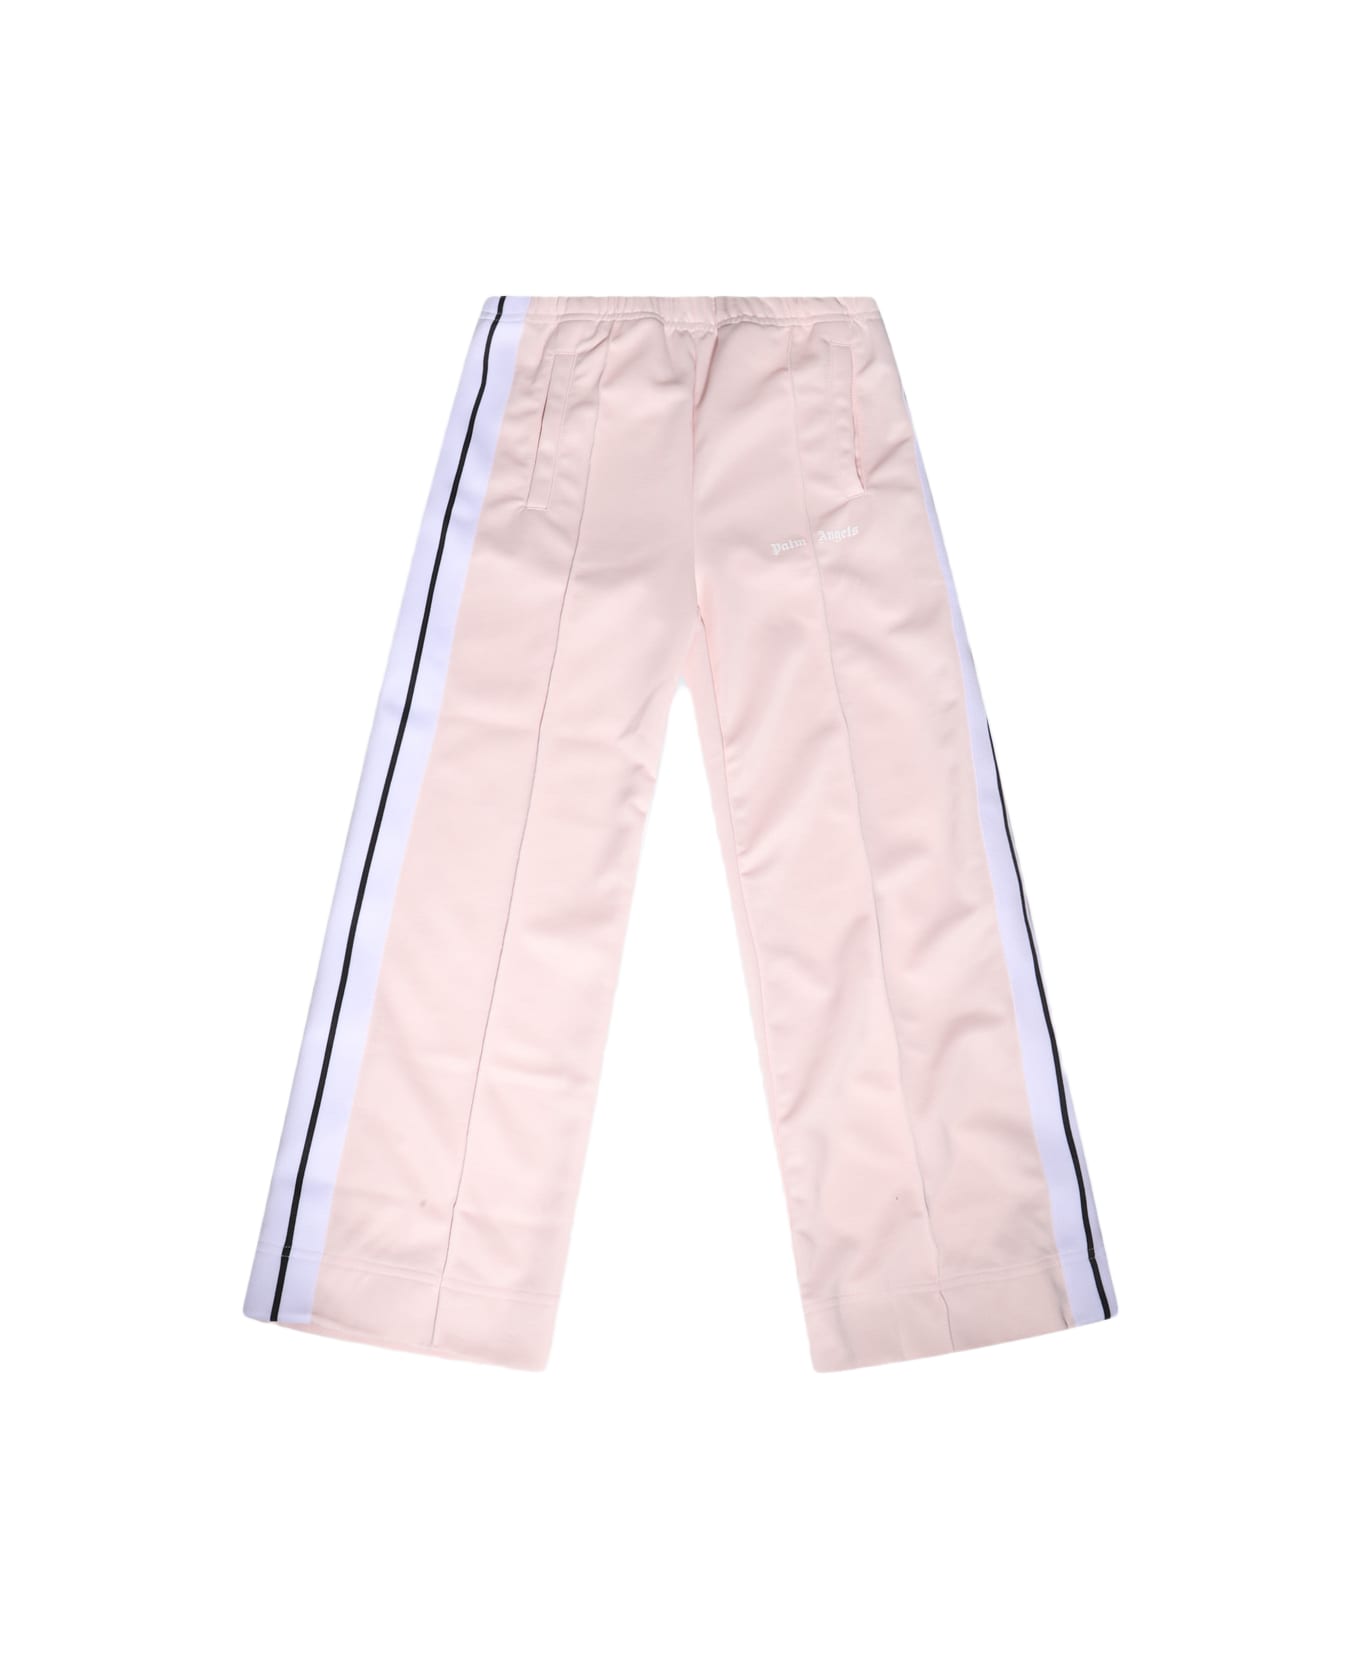 Palm Angels Light Pink Cotton Pants - LIGHT PINK